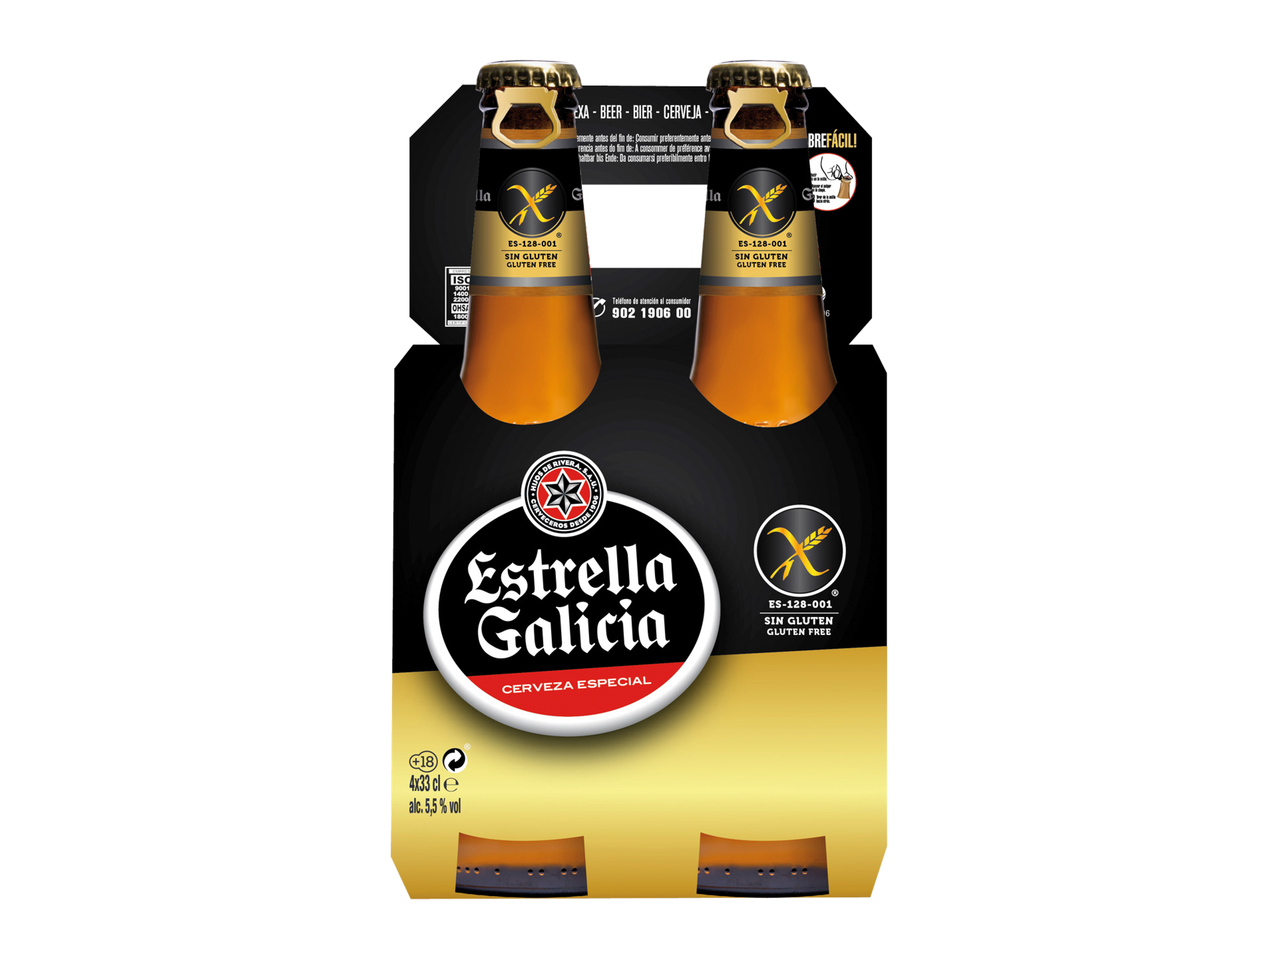 Estrella Galicia glutenfrei